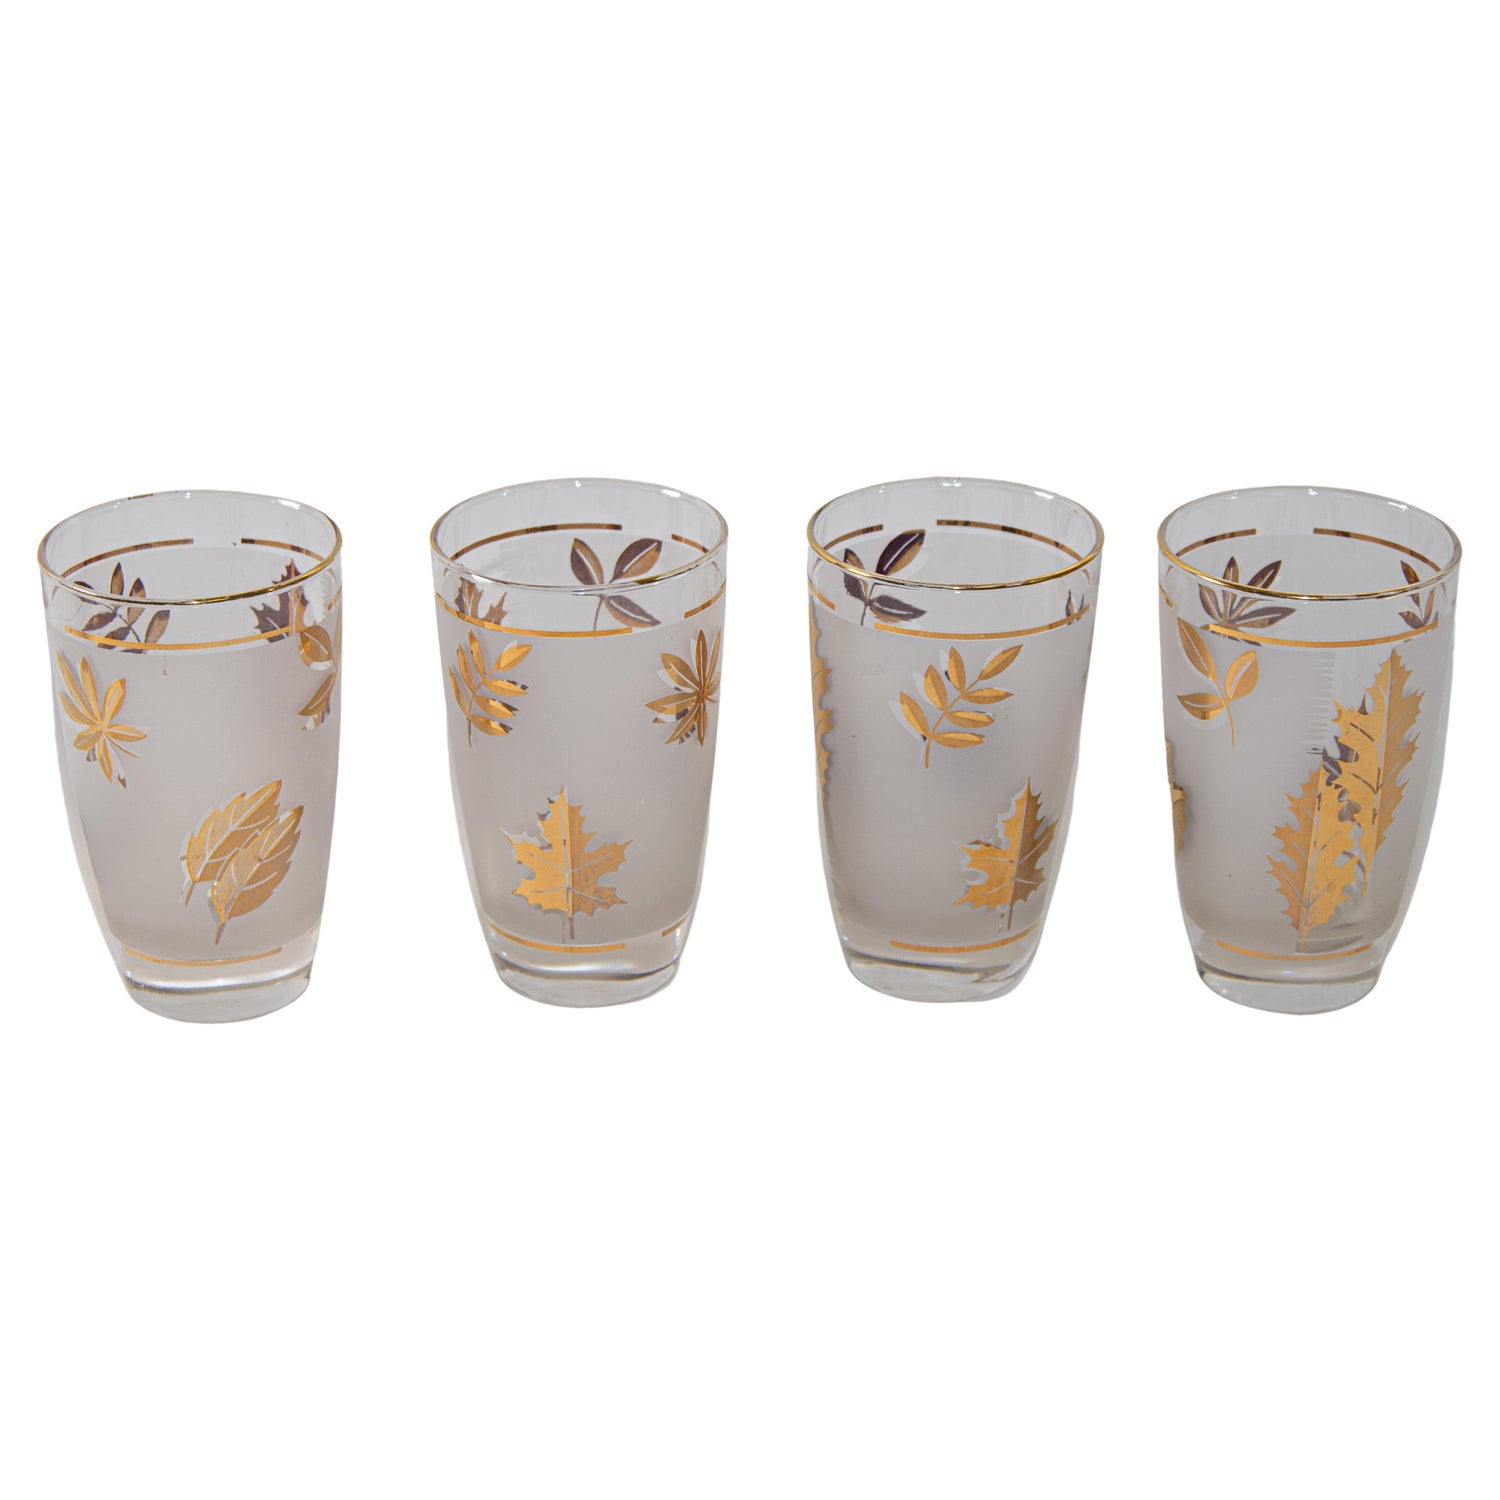 https://a.1stdibscdn.com/vintage-libbey-frosted-golden-foliage-cocktail-glasses-set-of-4-for-sale/f_9068/f_305966821664297994938/f_30596682_1664297997347_bg_processed.jpg?width=1500